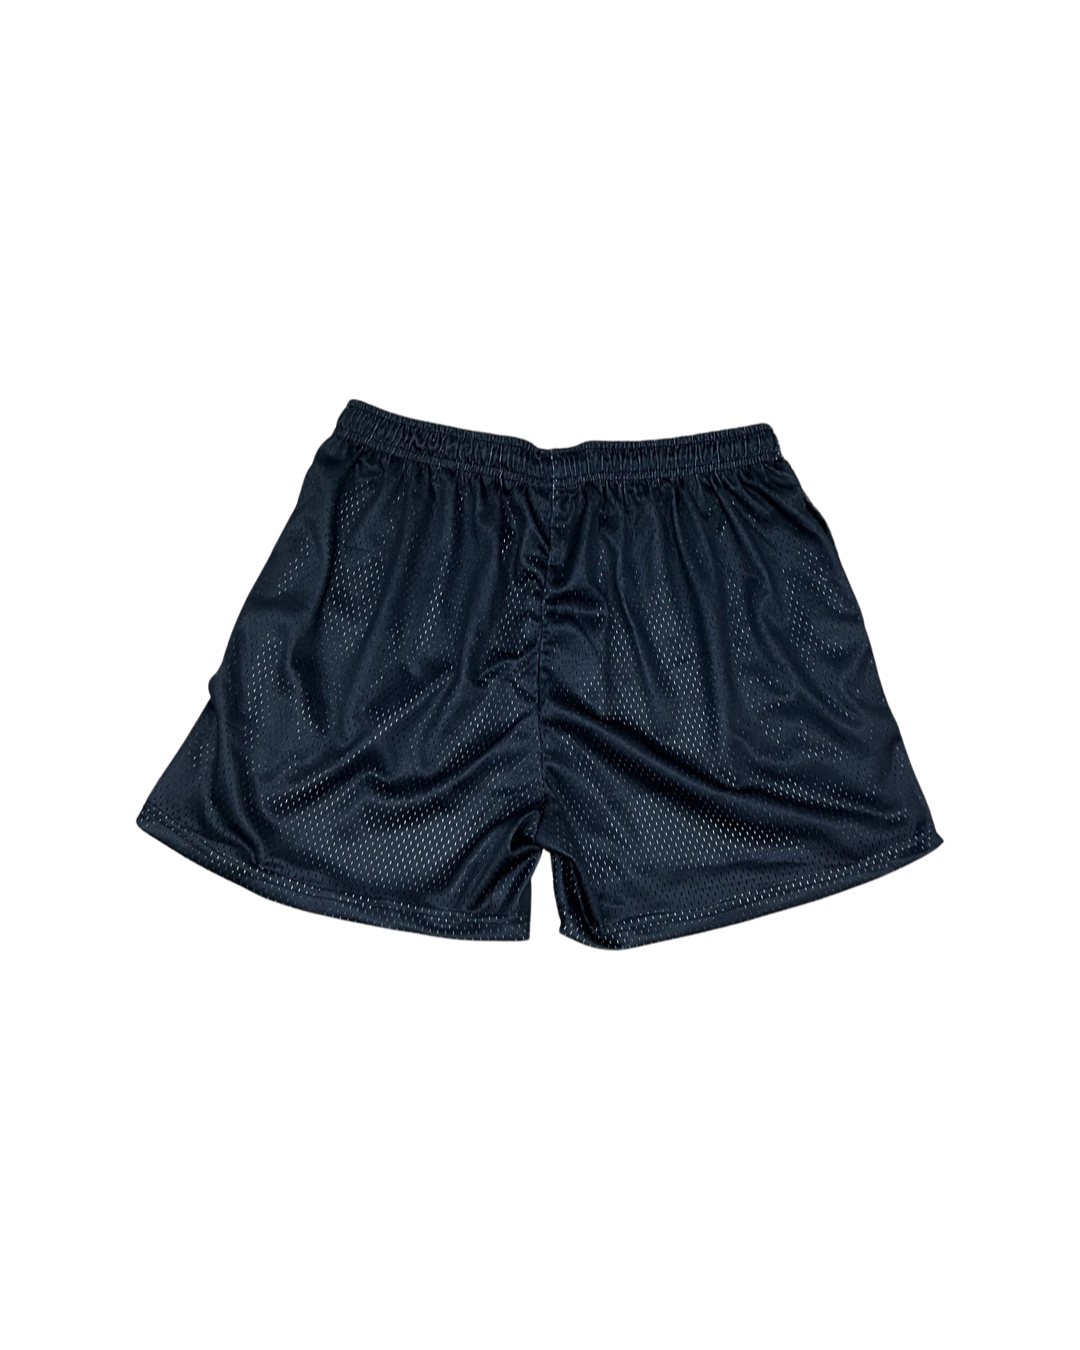 Premise X Trillion Boys® Black Mesh Shorts [LIMITED EDITION